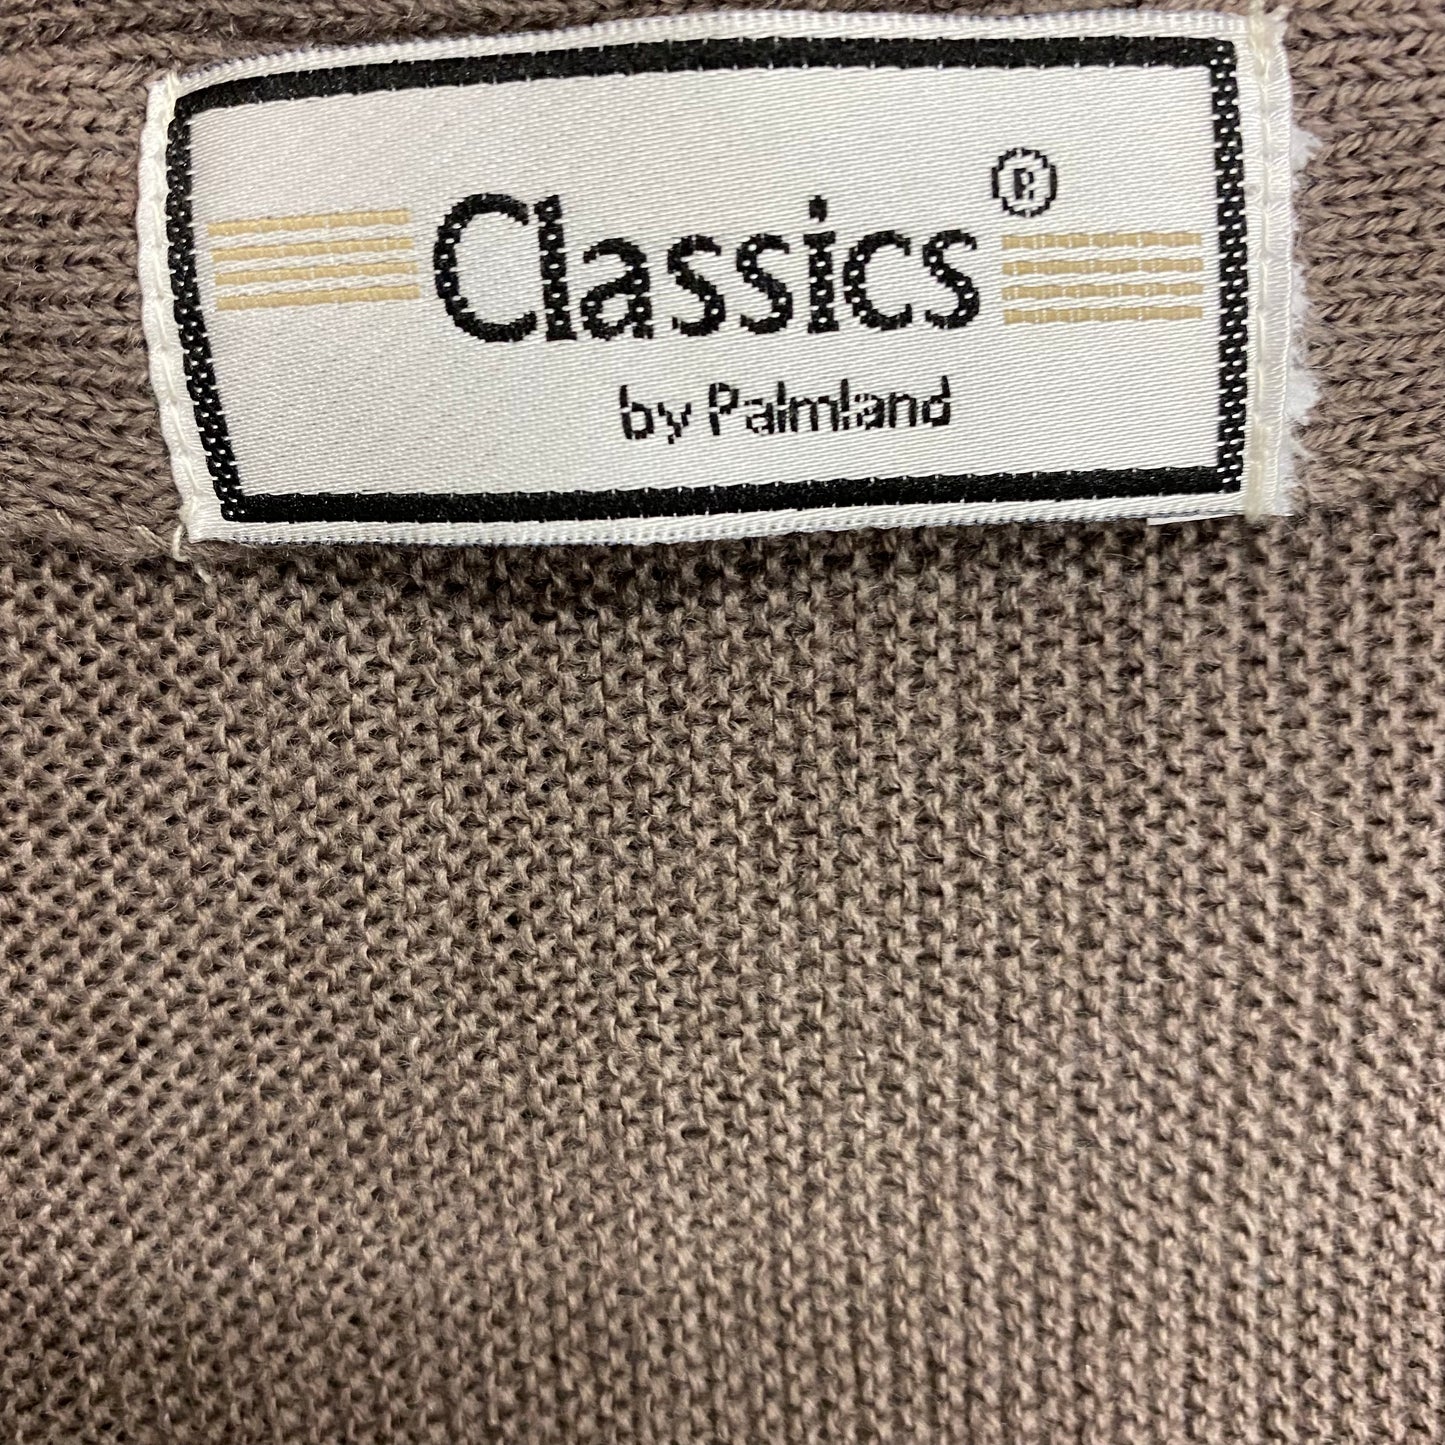 Vintage Palmland Brown Double Knit Cardigan - Size Medium